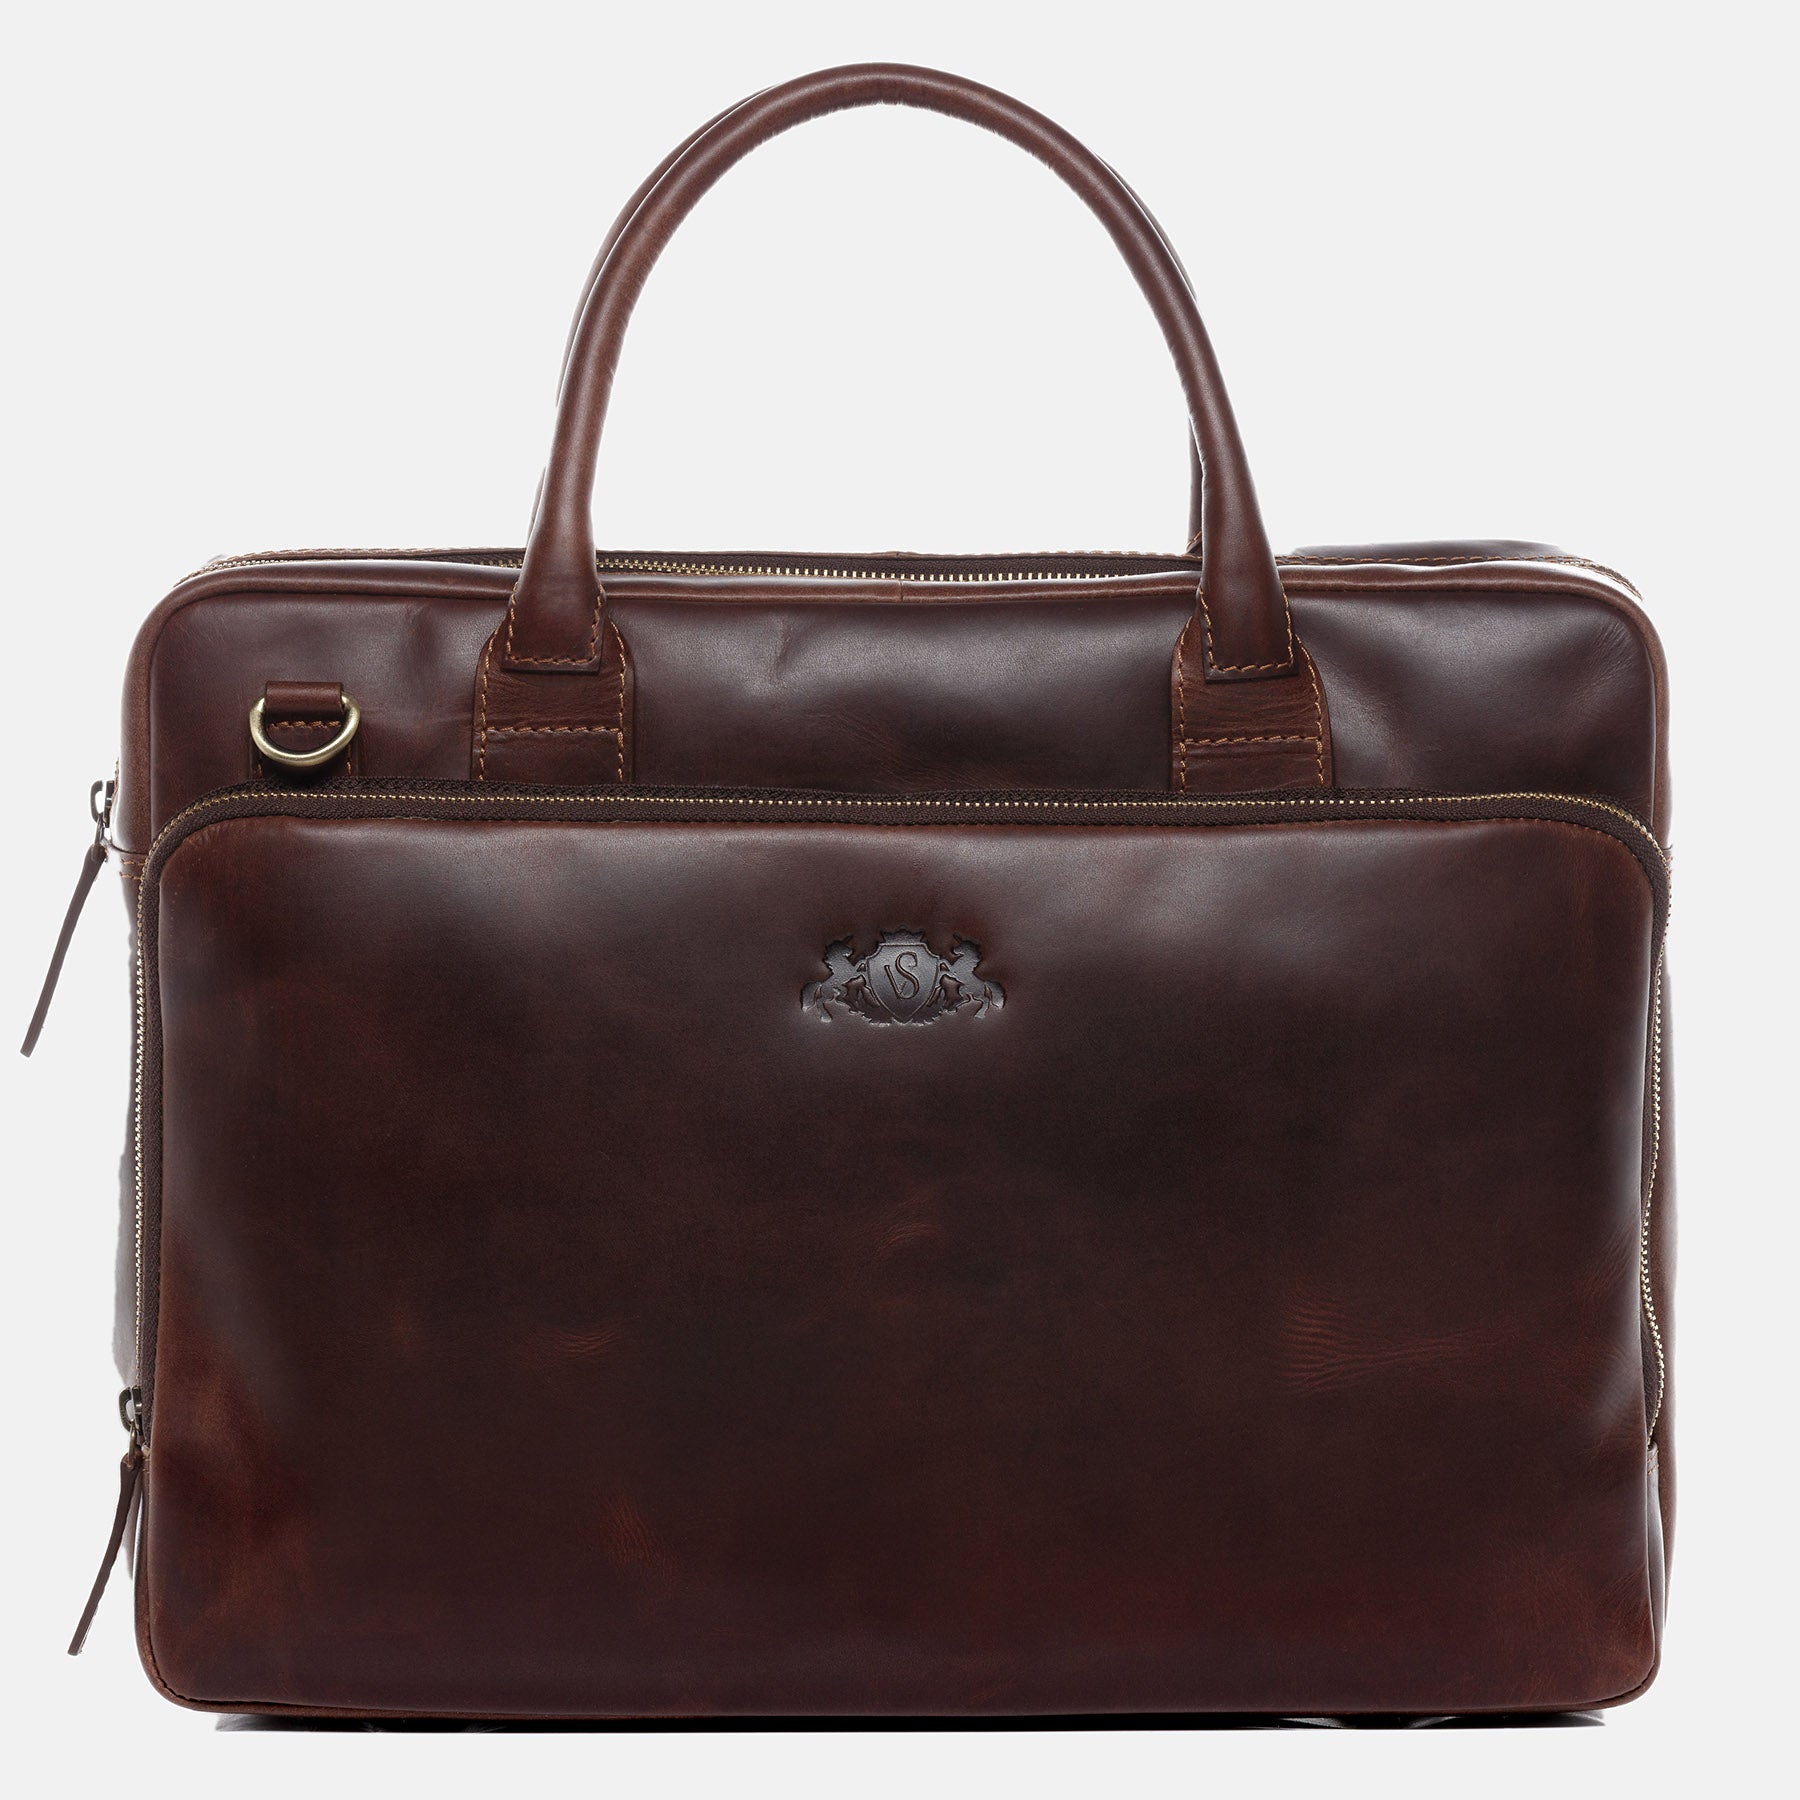 Laptop bag RYAN natural leather brown-cognac